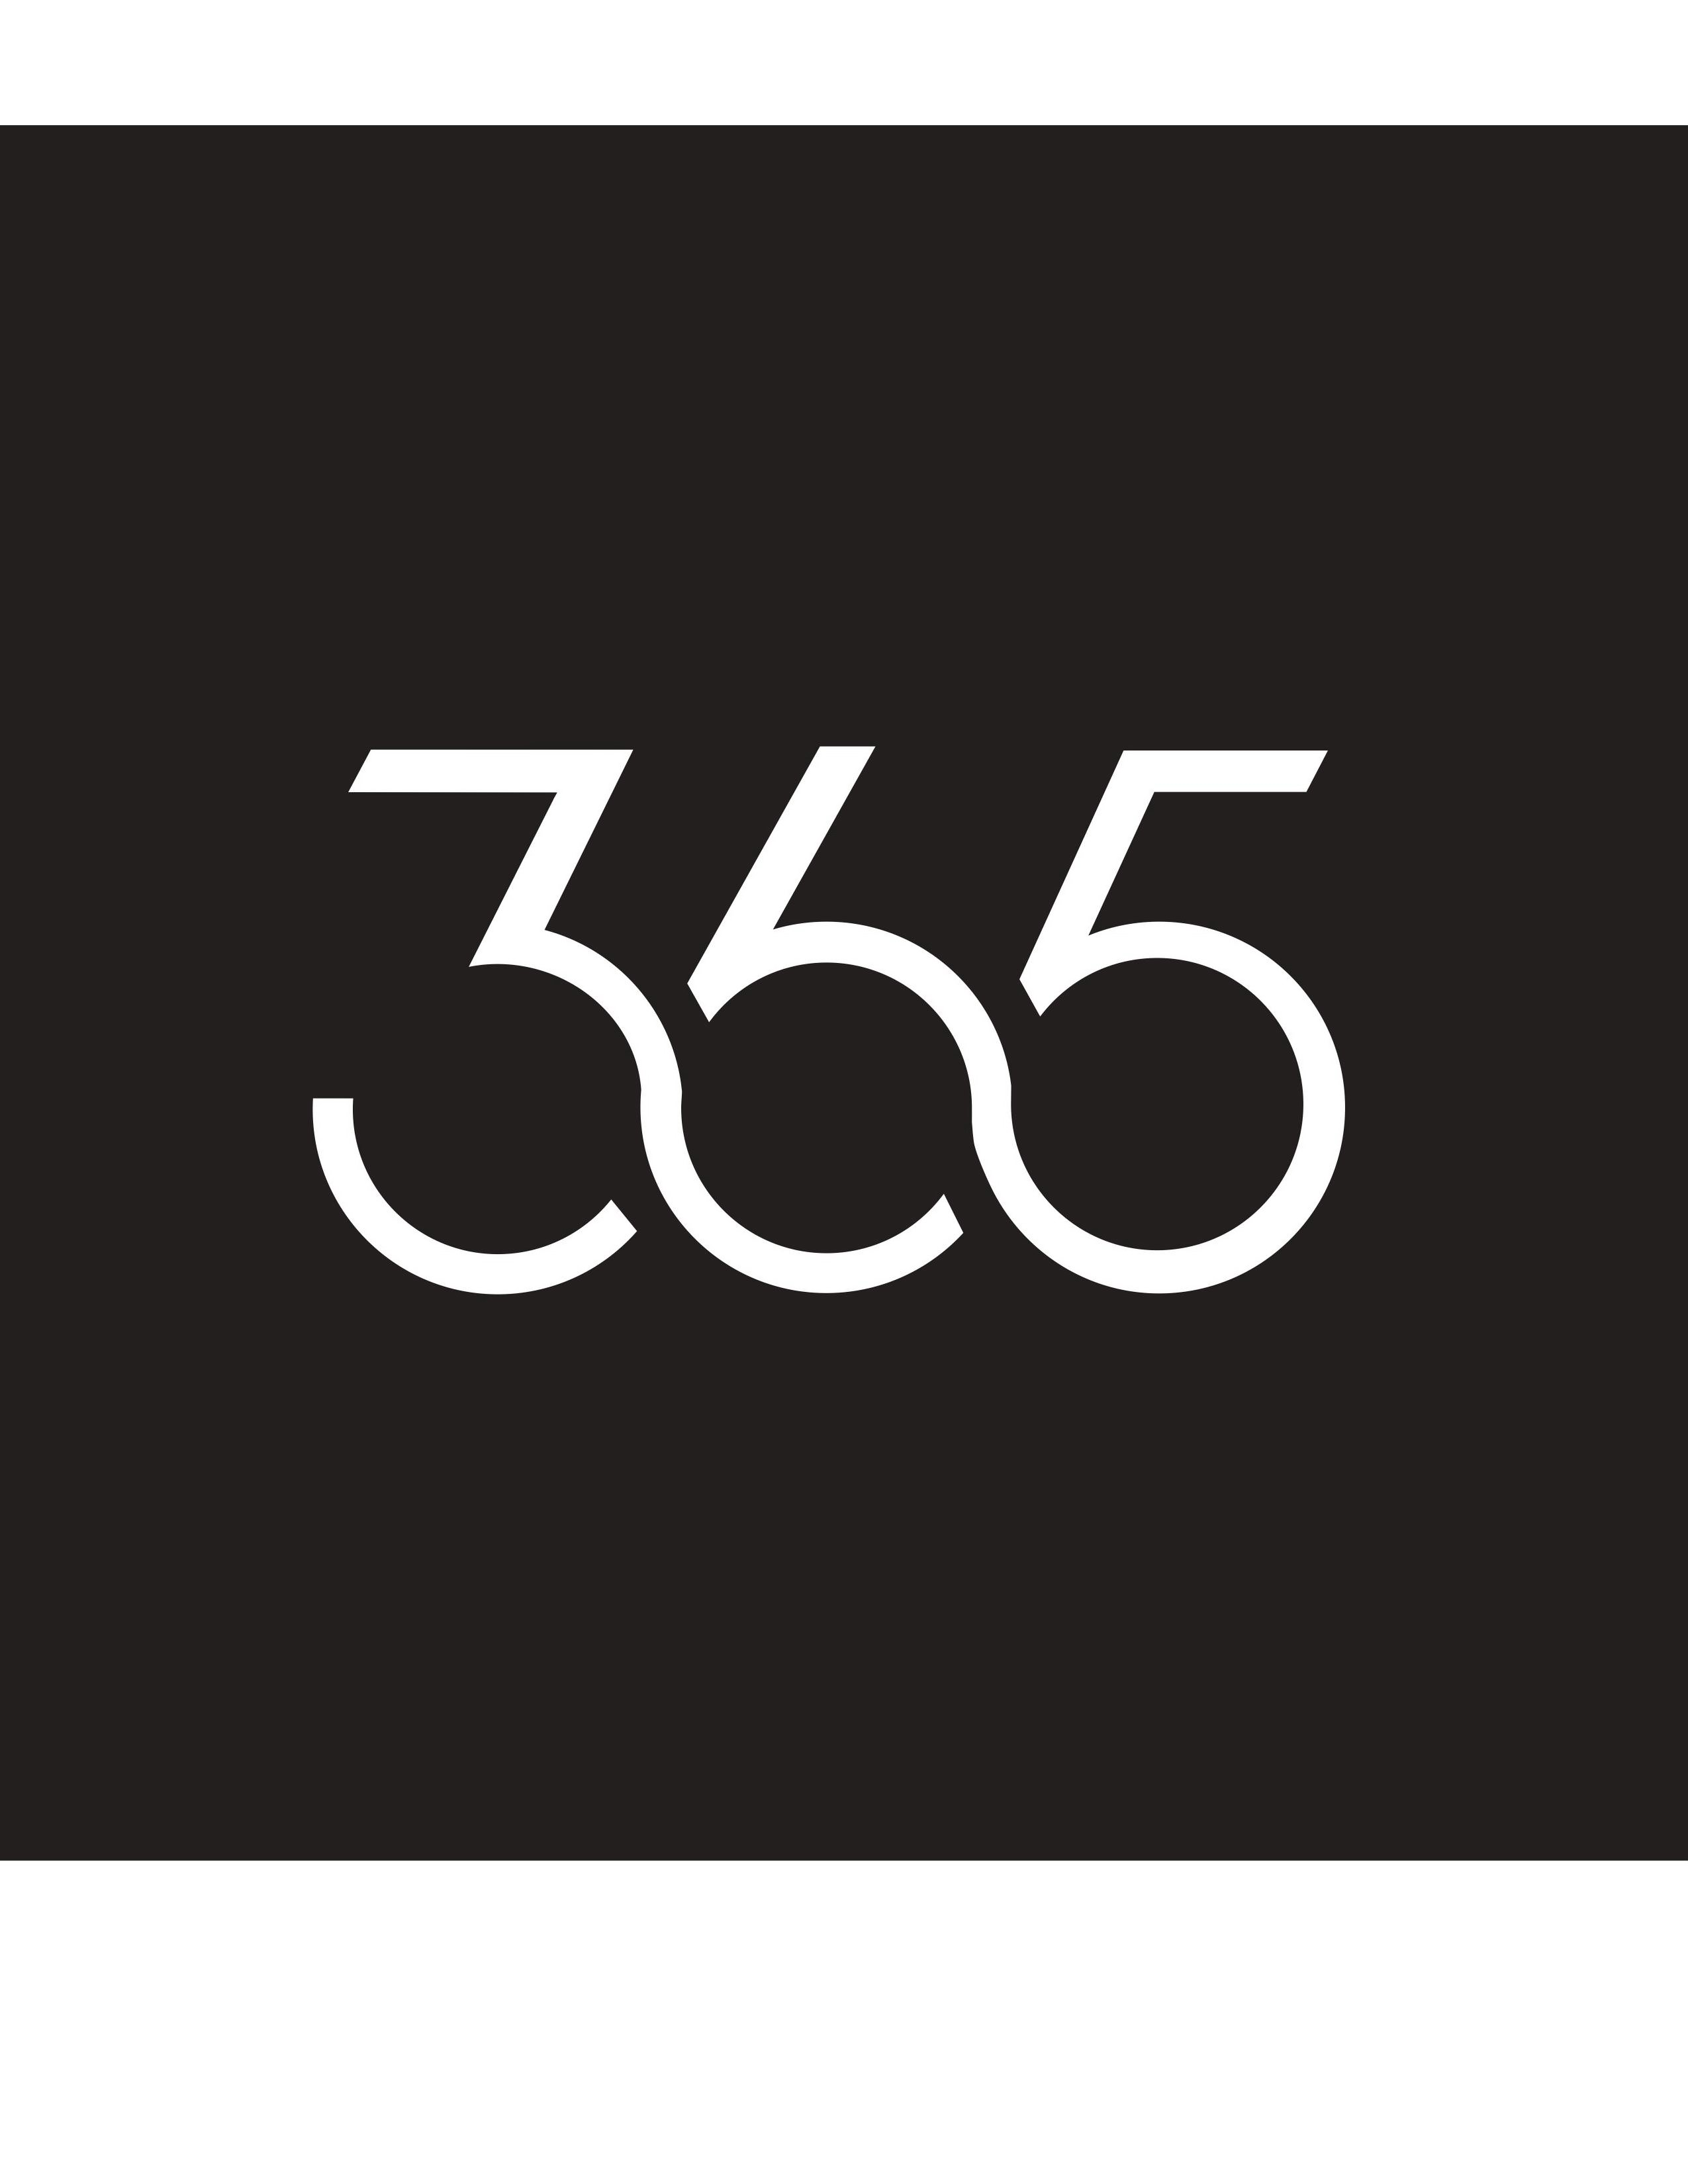 Trademark Logo 365